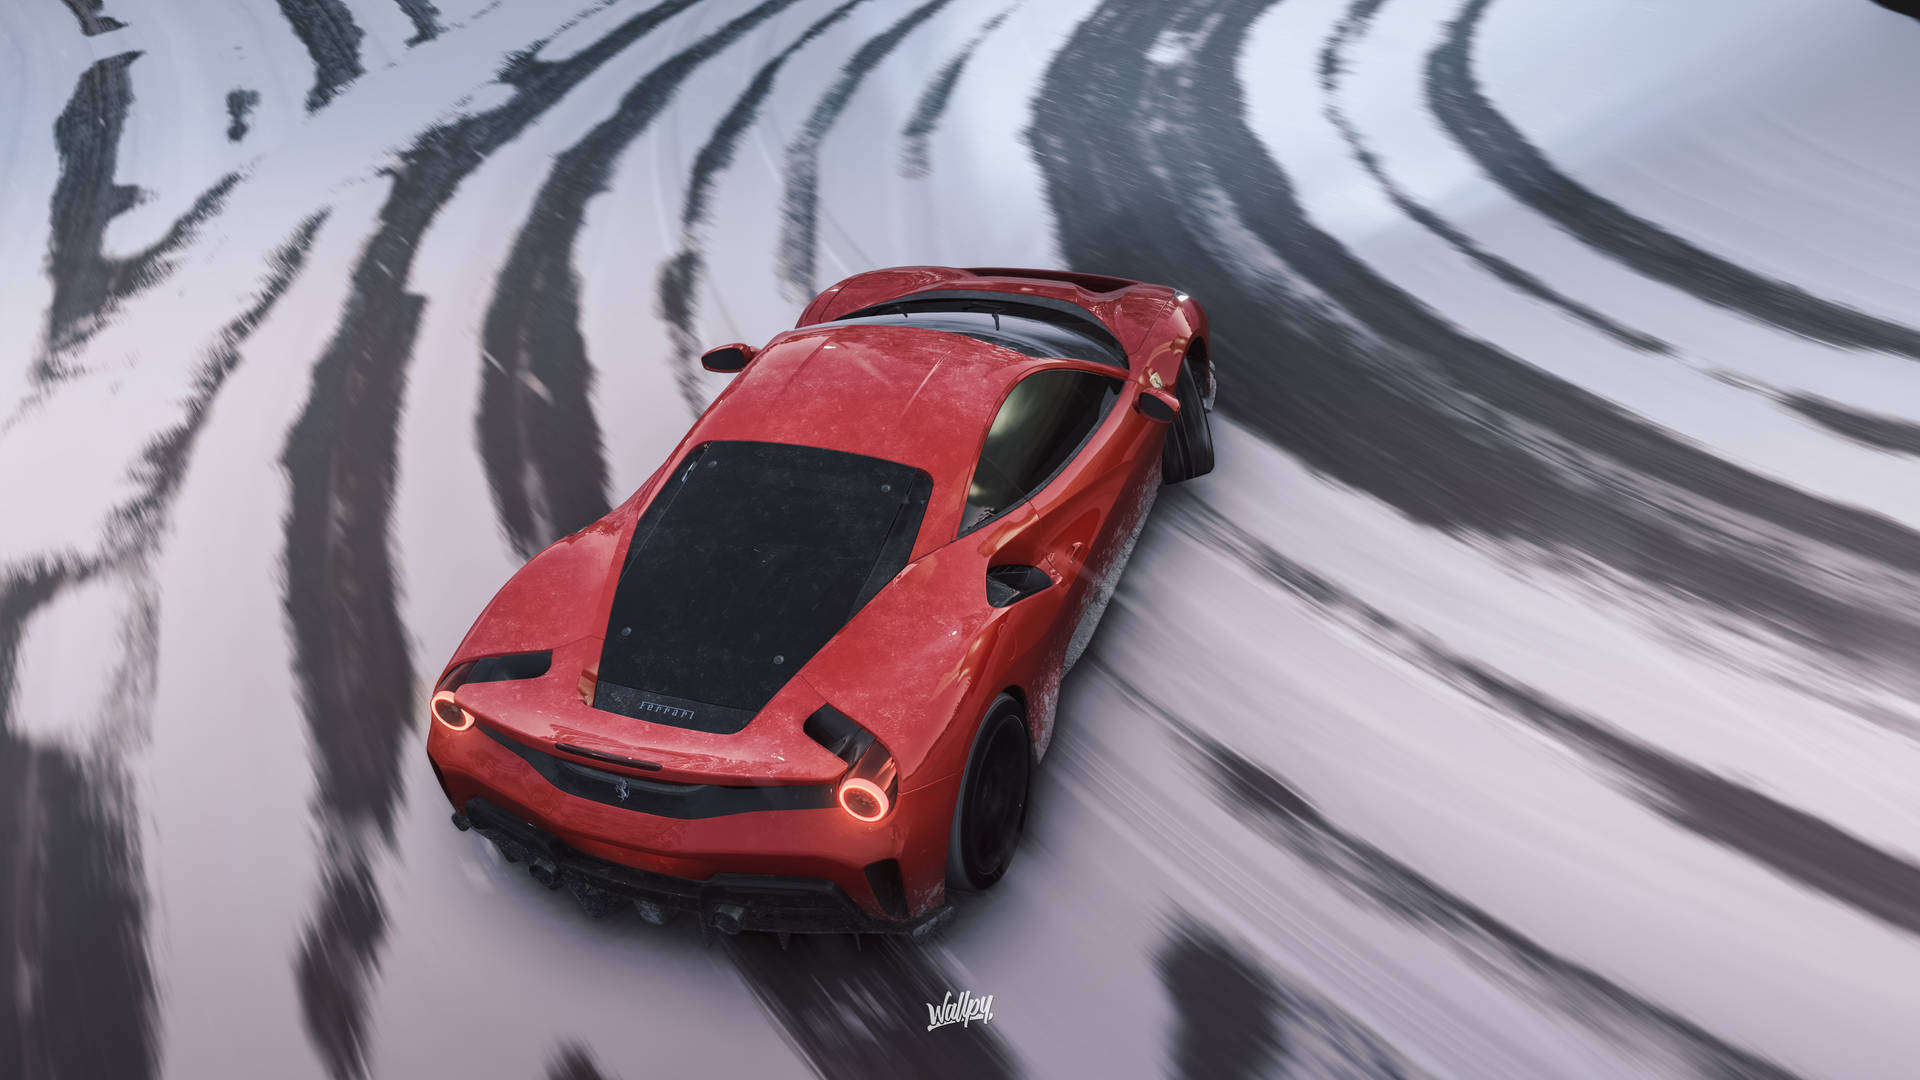 Forzahorizon 4 4k Ferrari Im Schnee Driftend Wallpaper